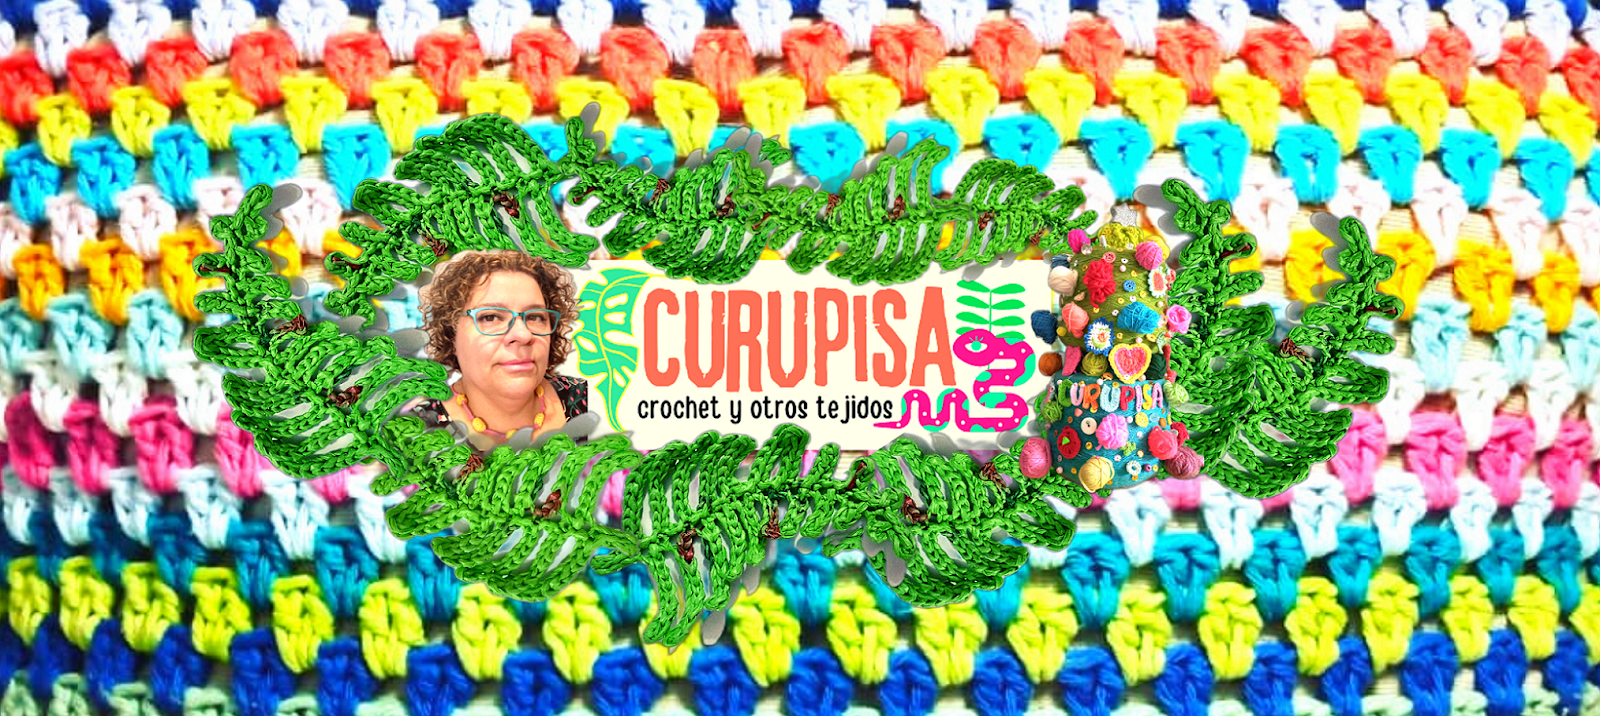 Curupisa